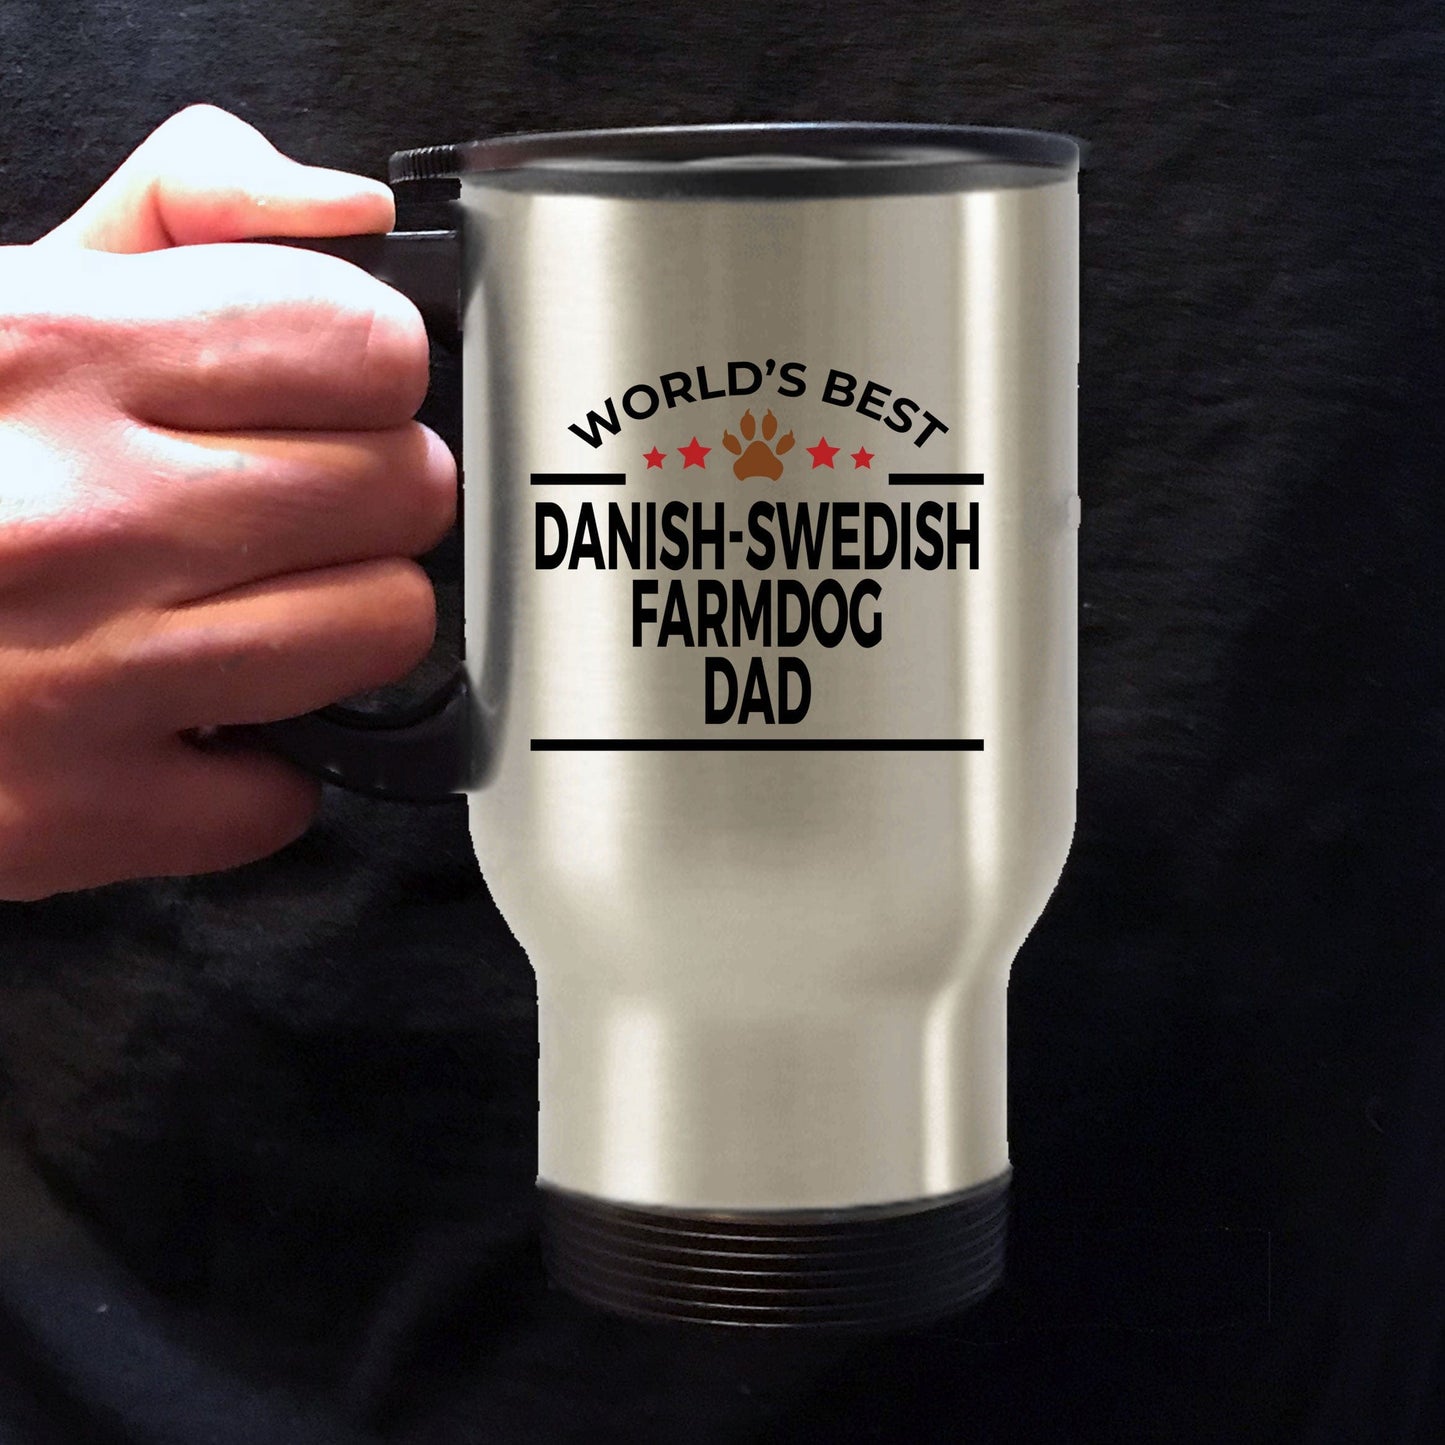 Danish-Swedish Farmdog Dad Travel Coffee Mug